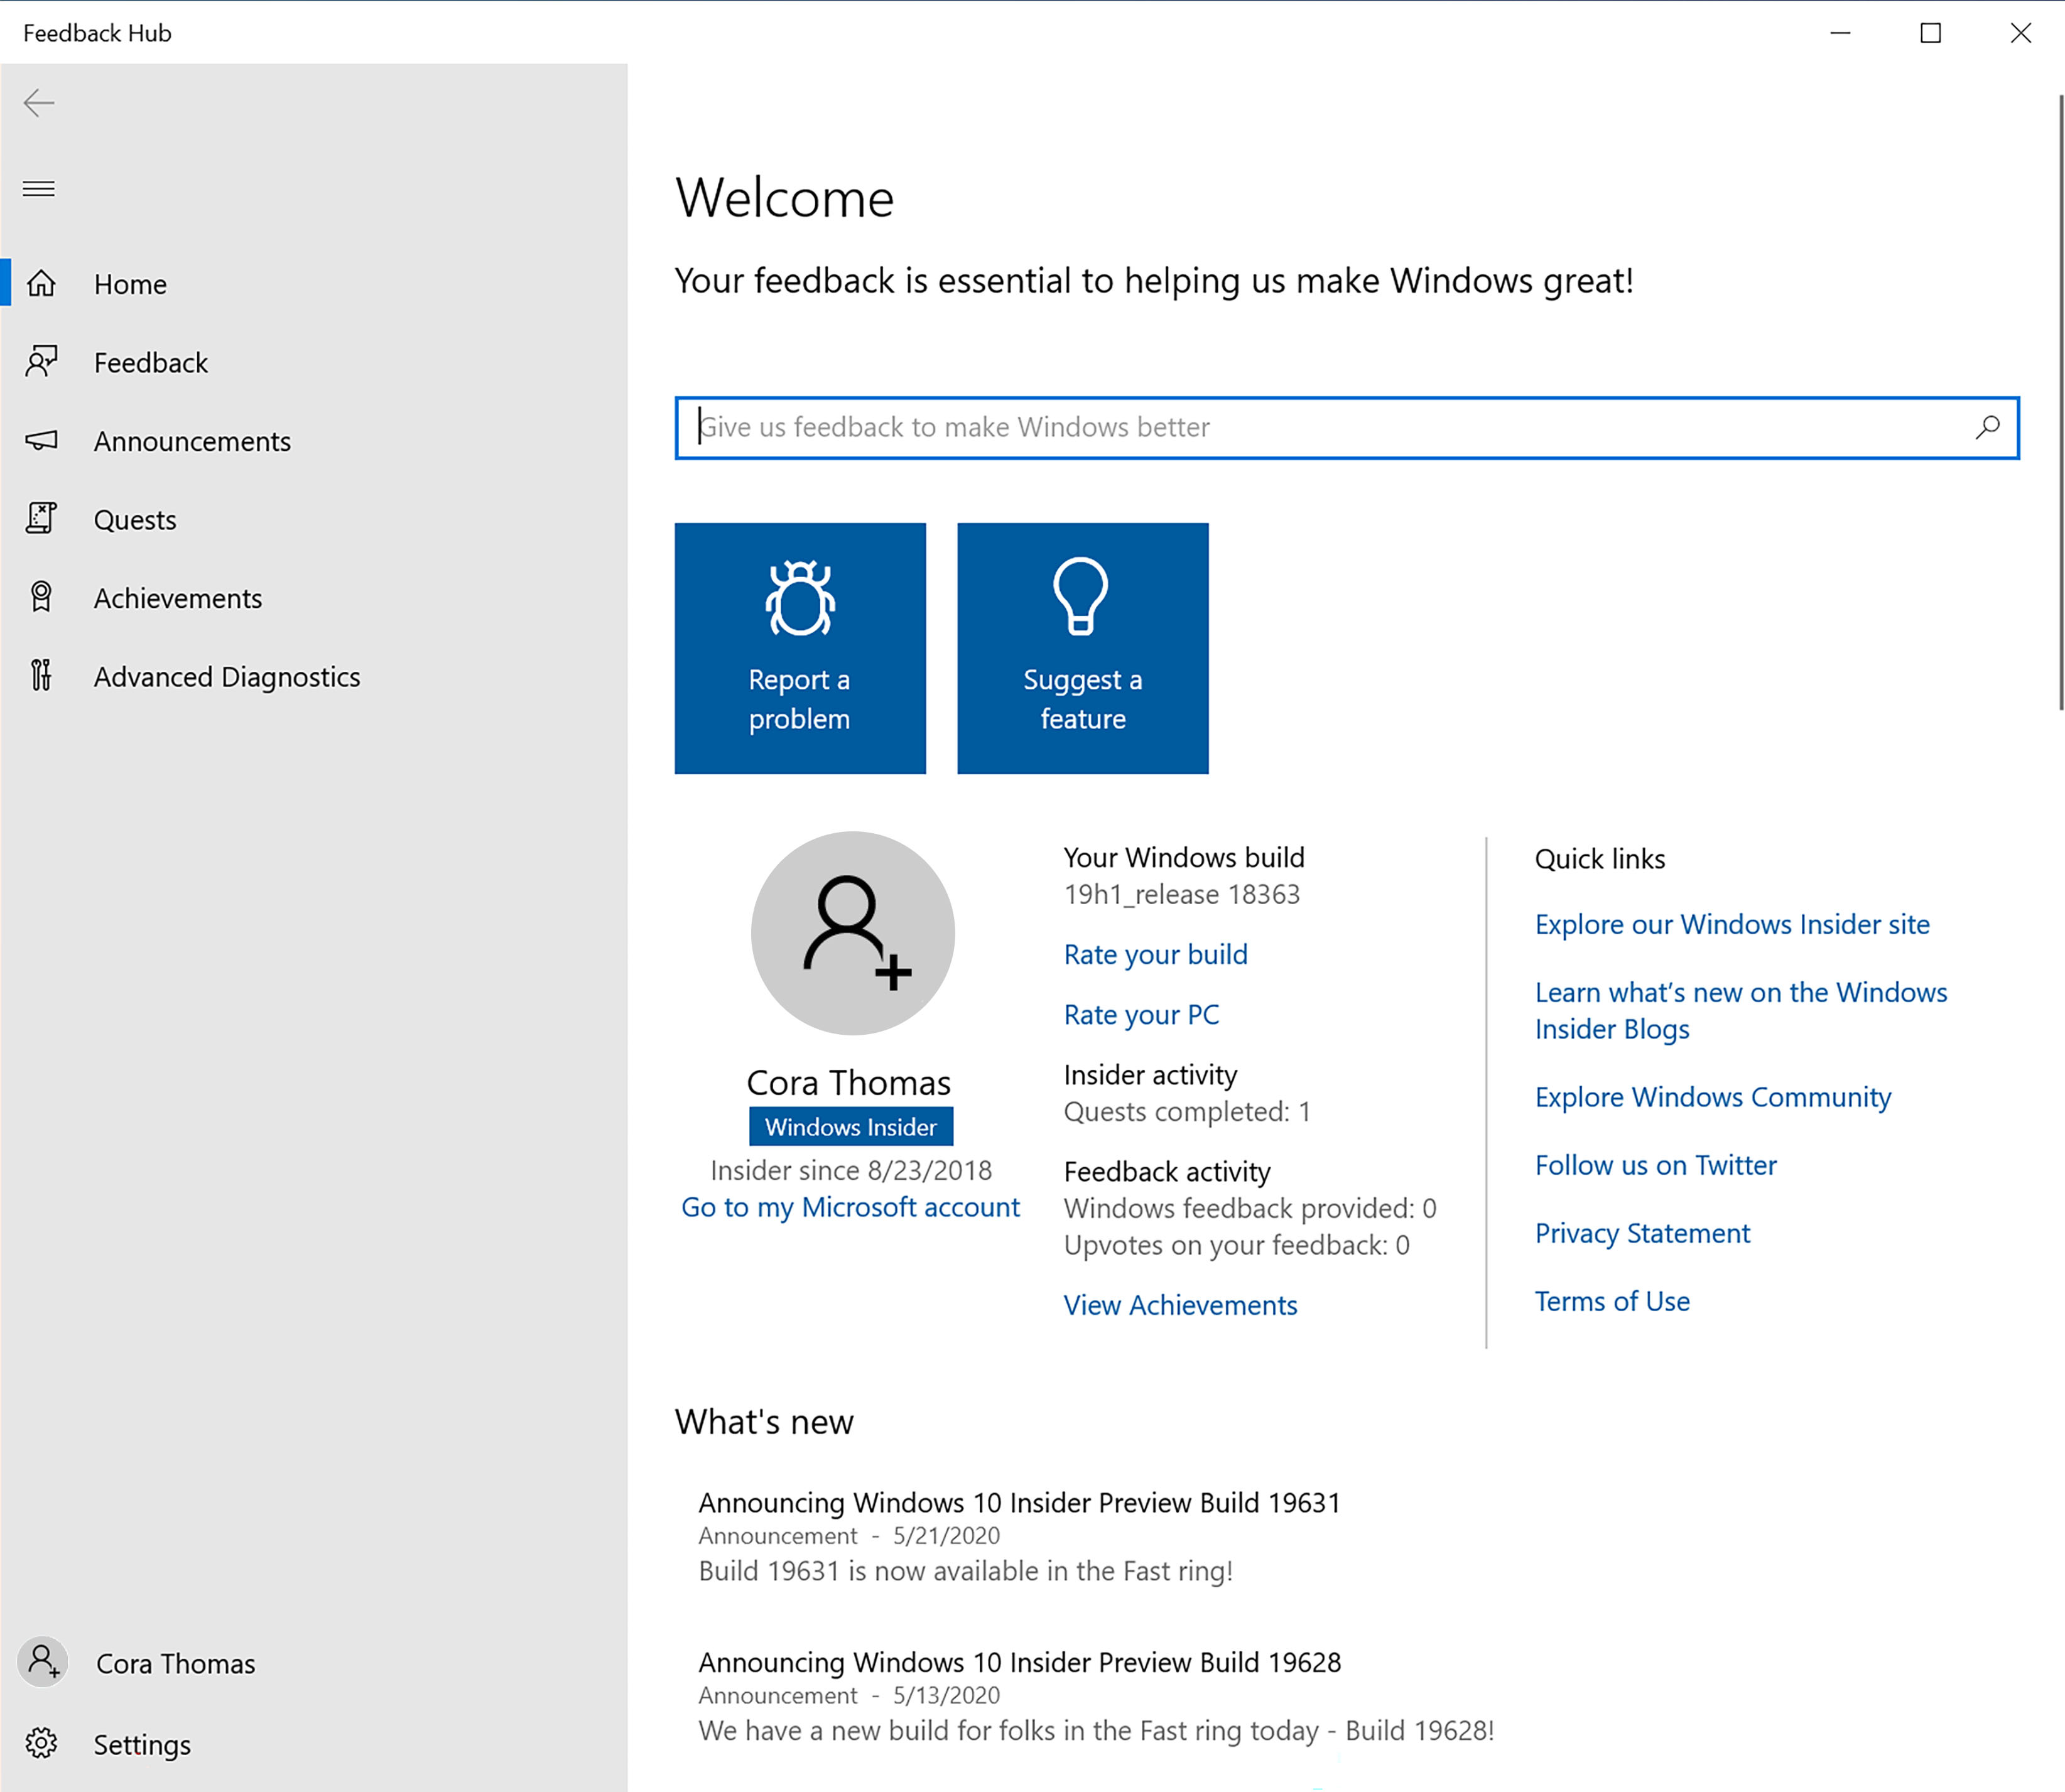 Aprire l'Hub di Feedback - Windows Insider Program | Microsoft Learn